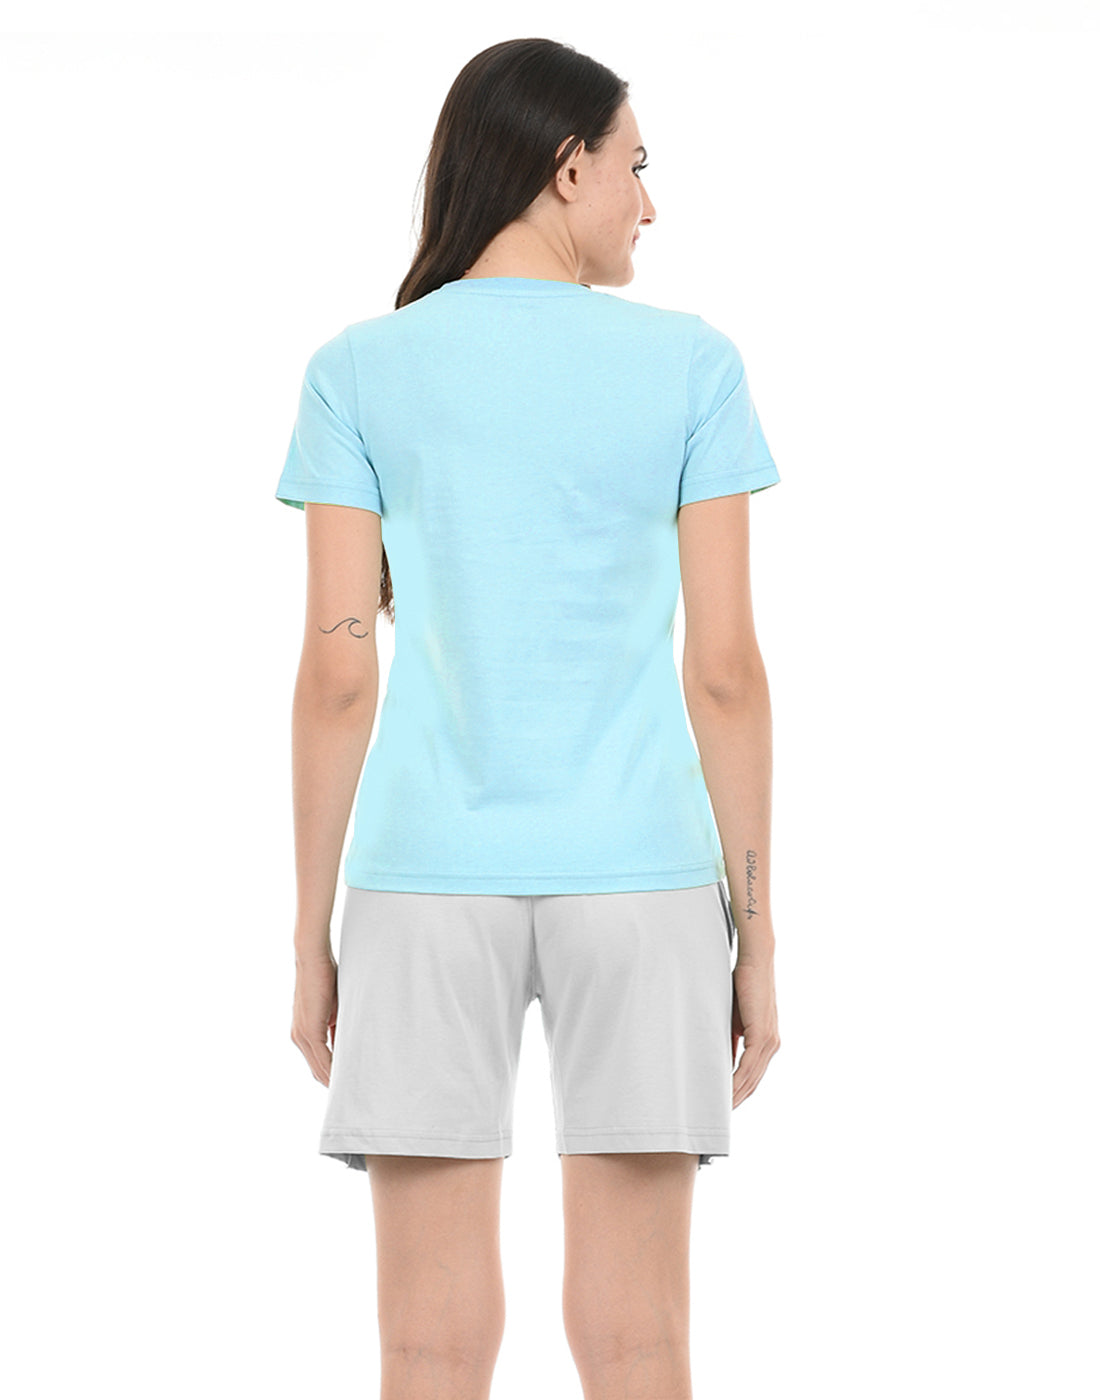 Women's Sleepwear Print T-Shirt & Shorts 2 Pieces